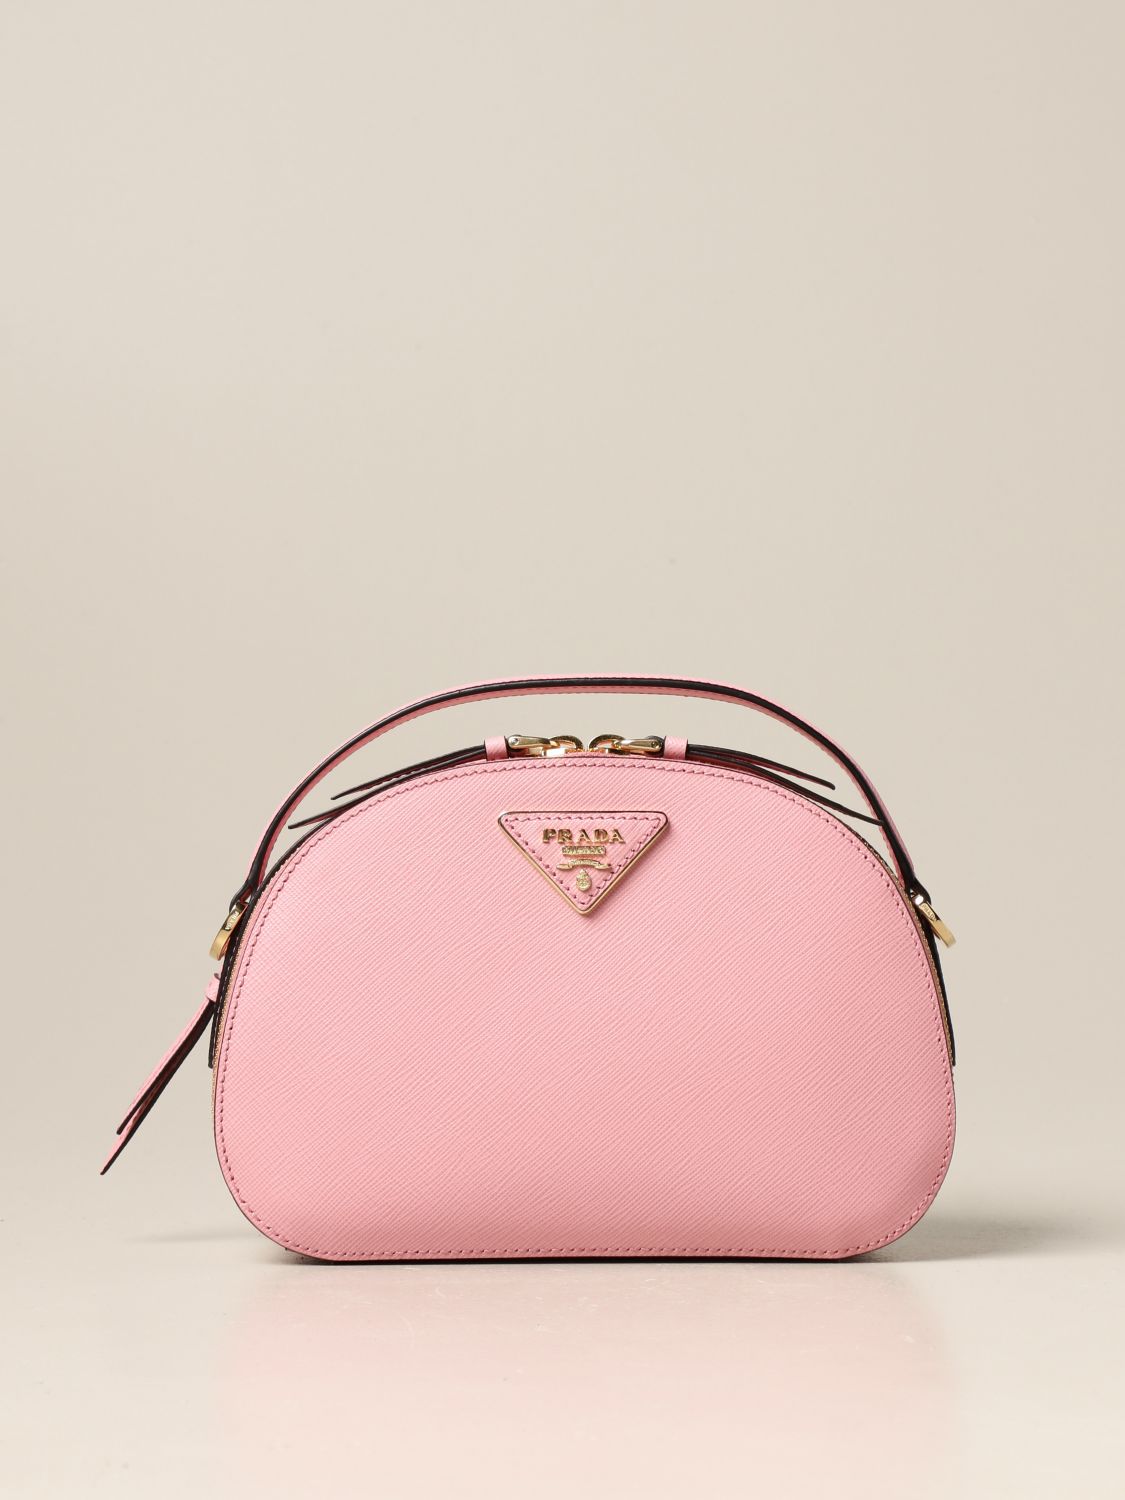 PRADA: Odette bag in saffiano leather - Pink | Prada mini bag 1BH123 NZV  online on 